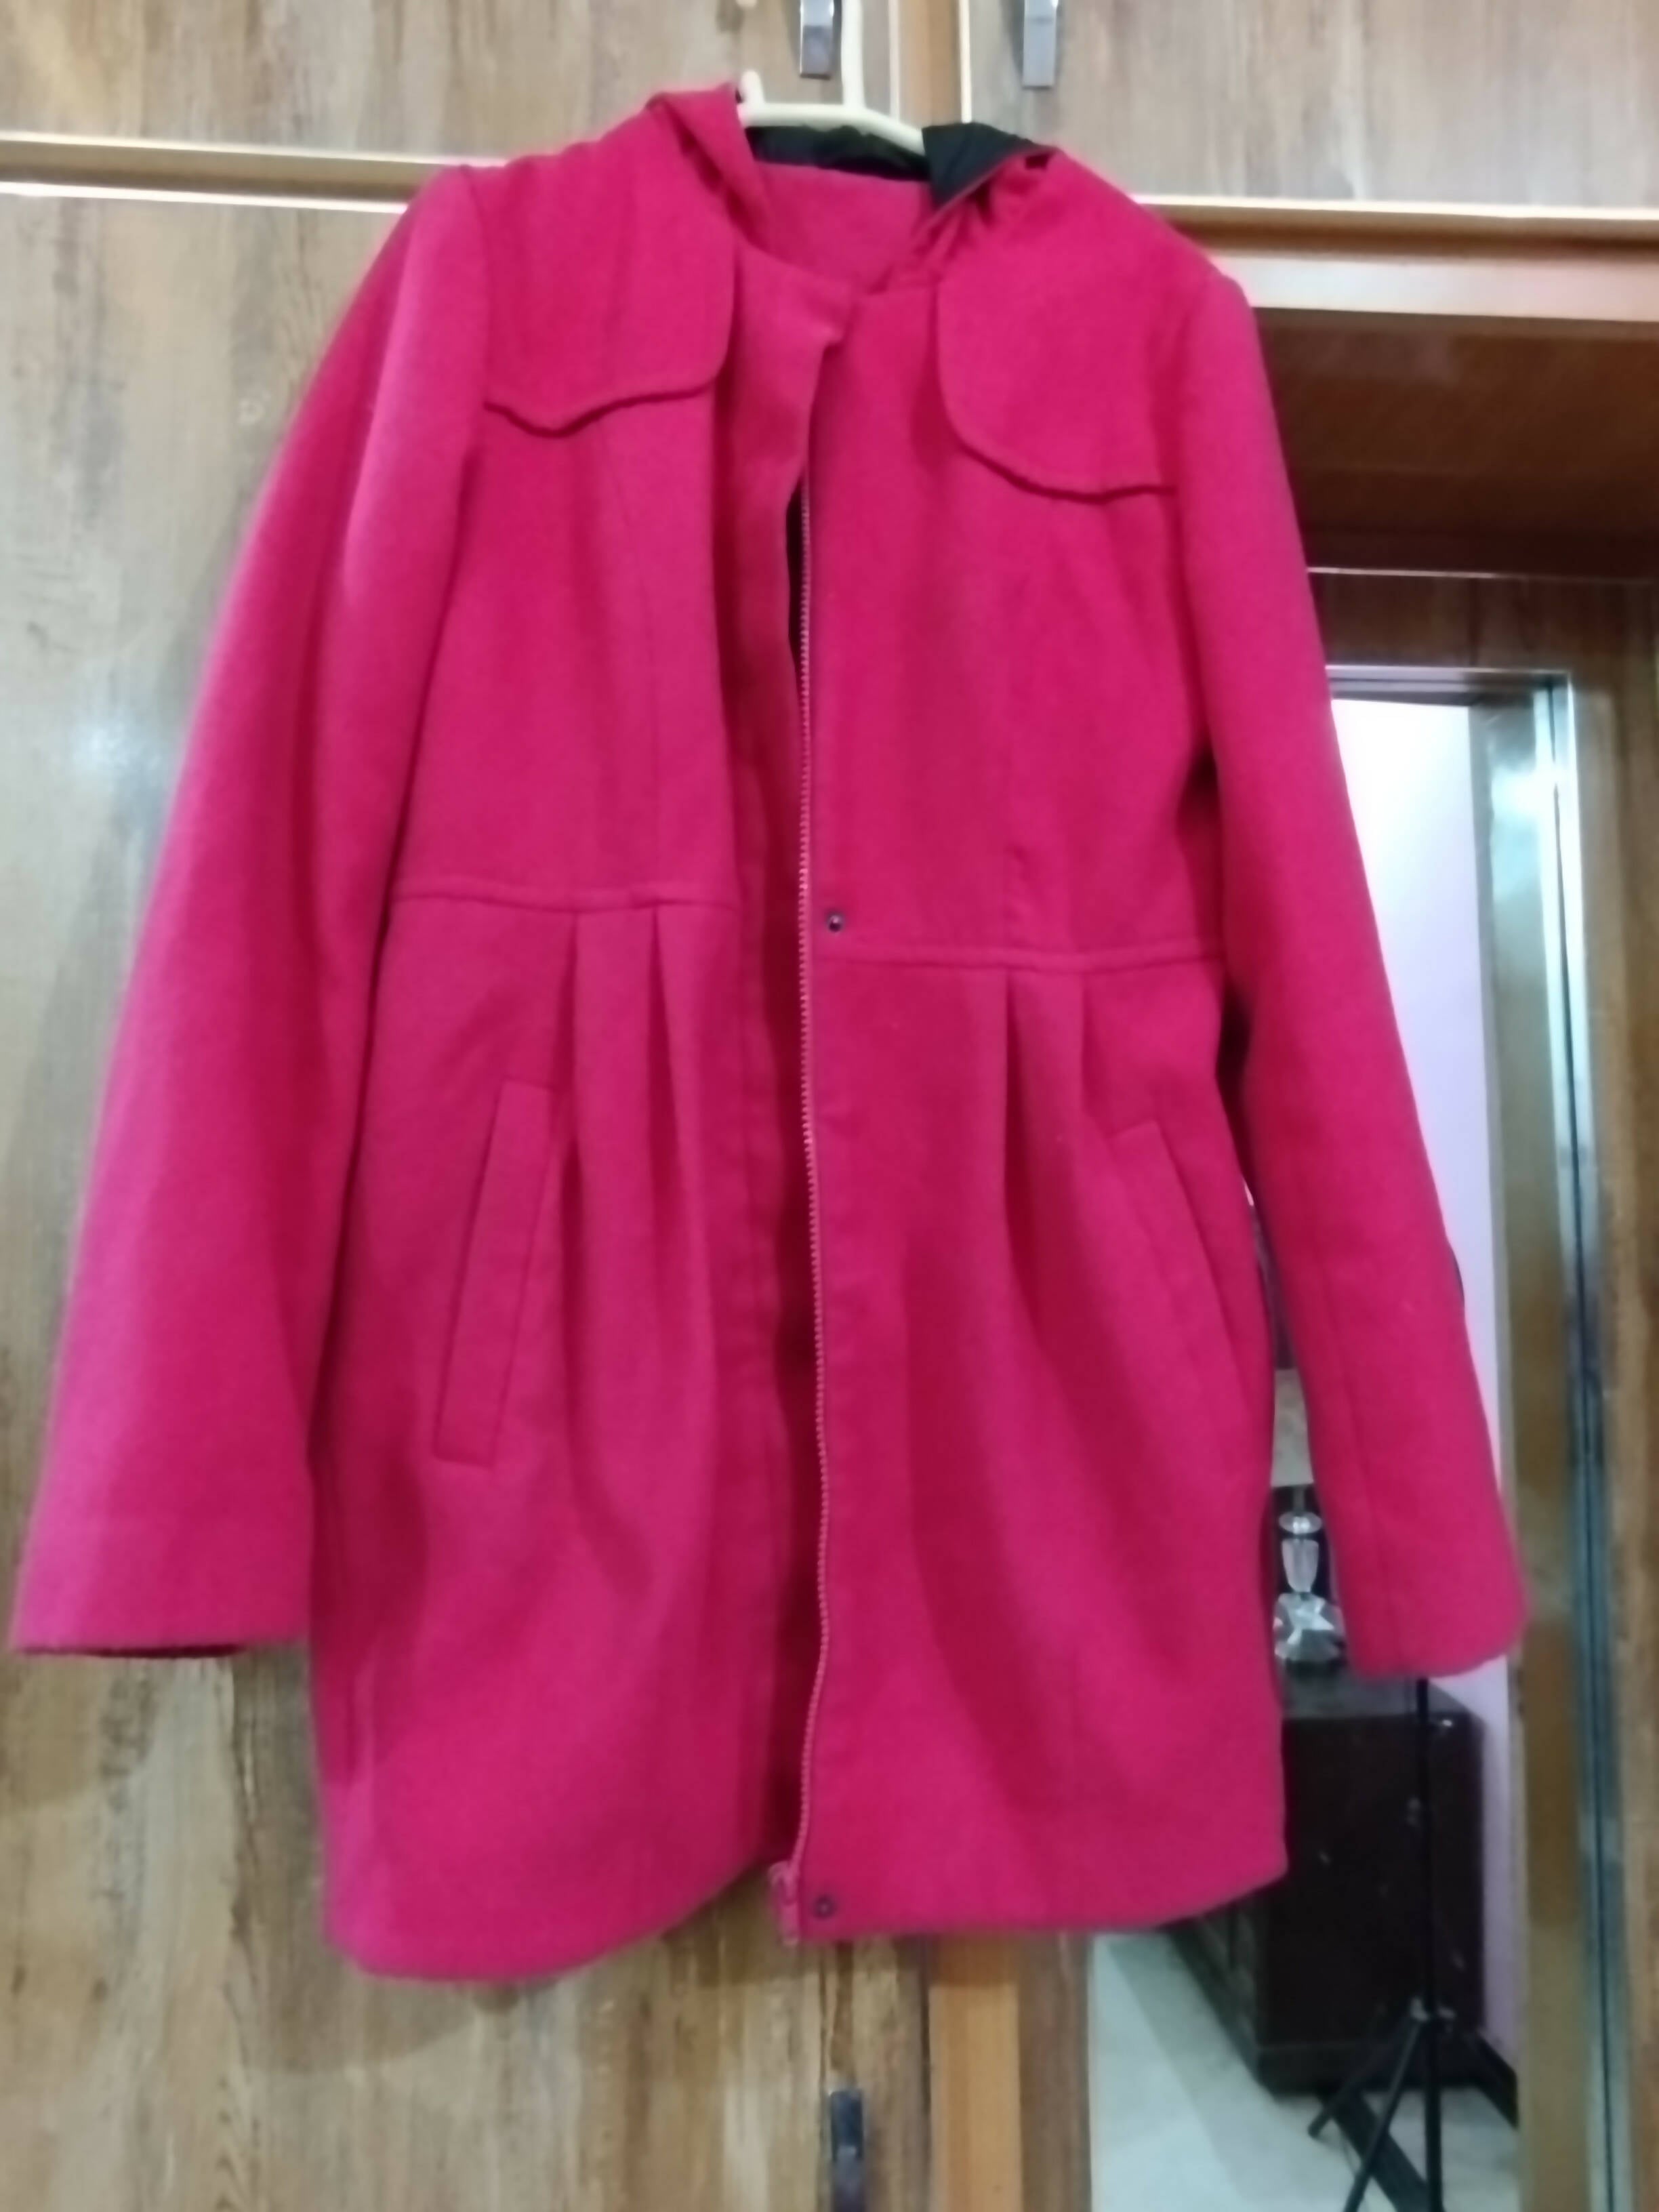 Pink Coat for Girls | Kids Winter | Medium | New